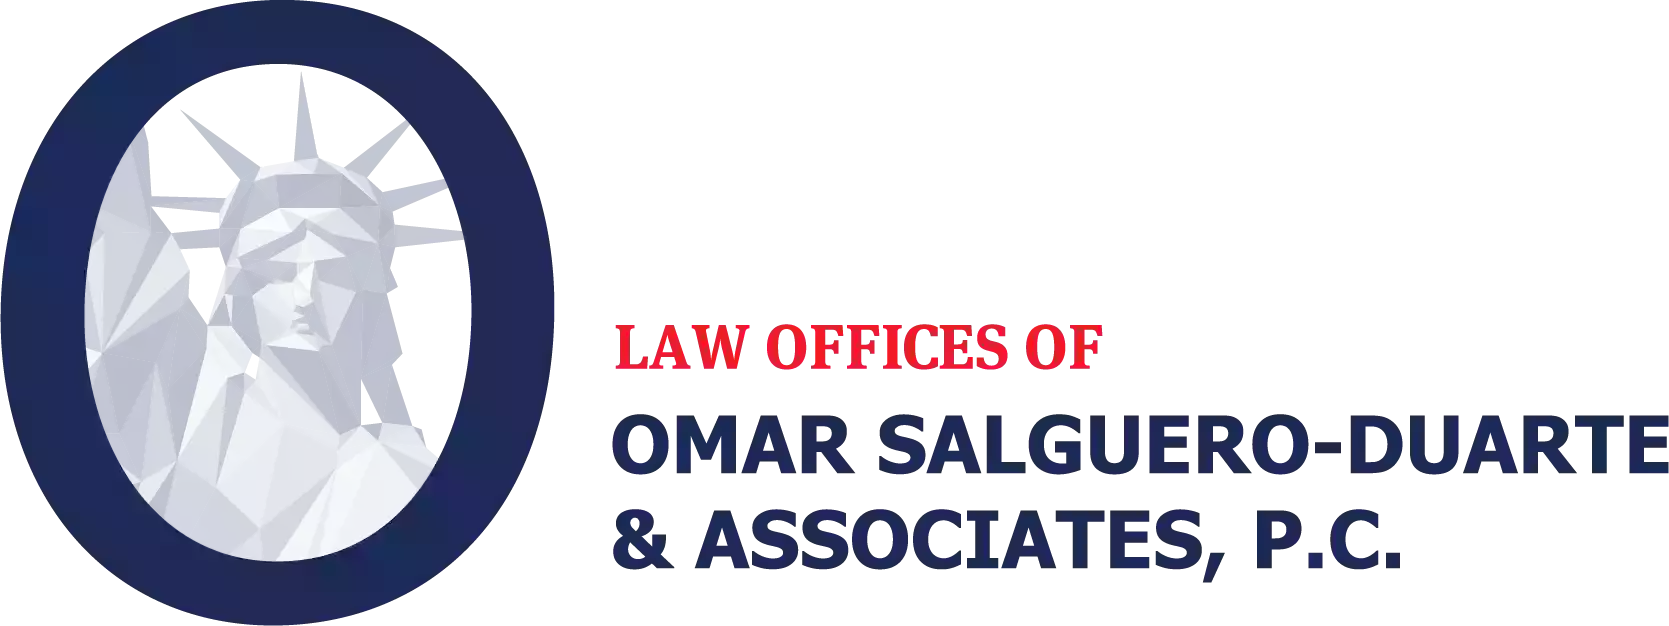 Omar Andres Salguero-Duarte Attorney at Law